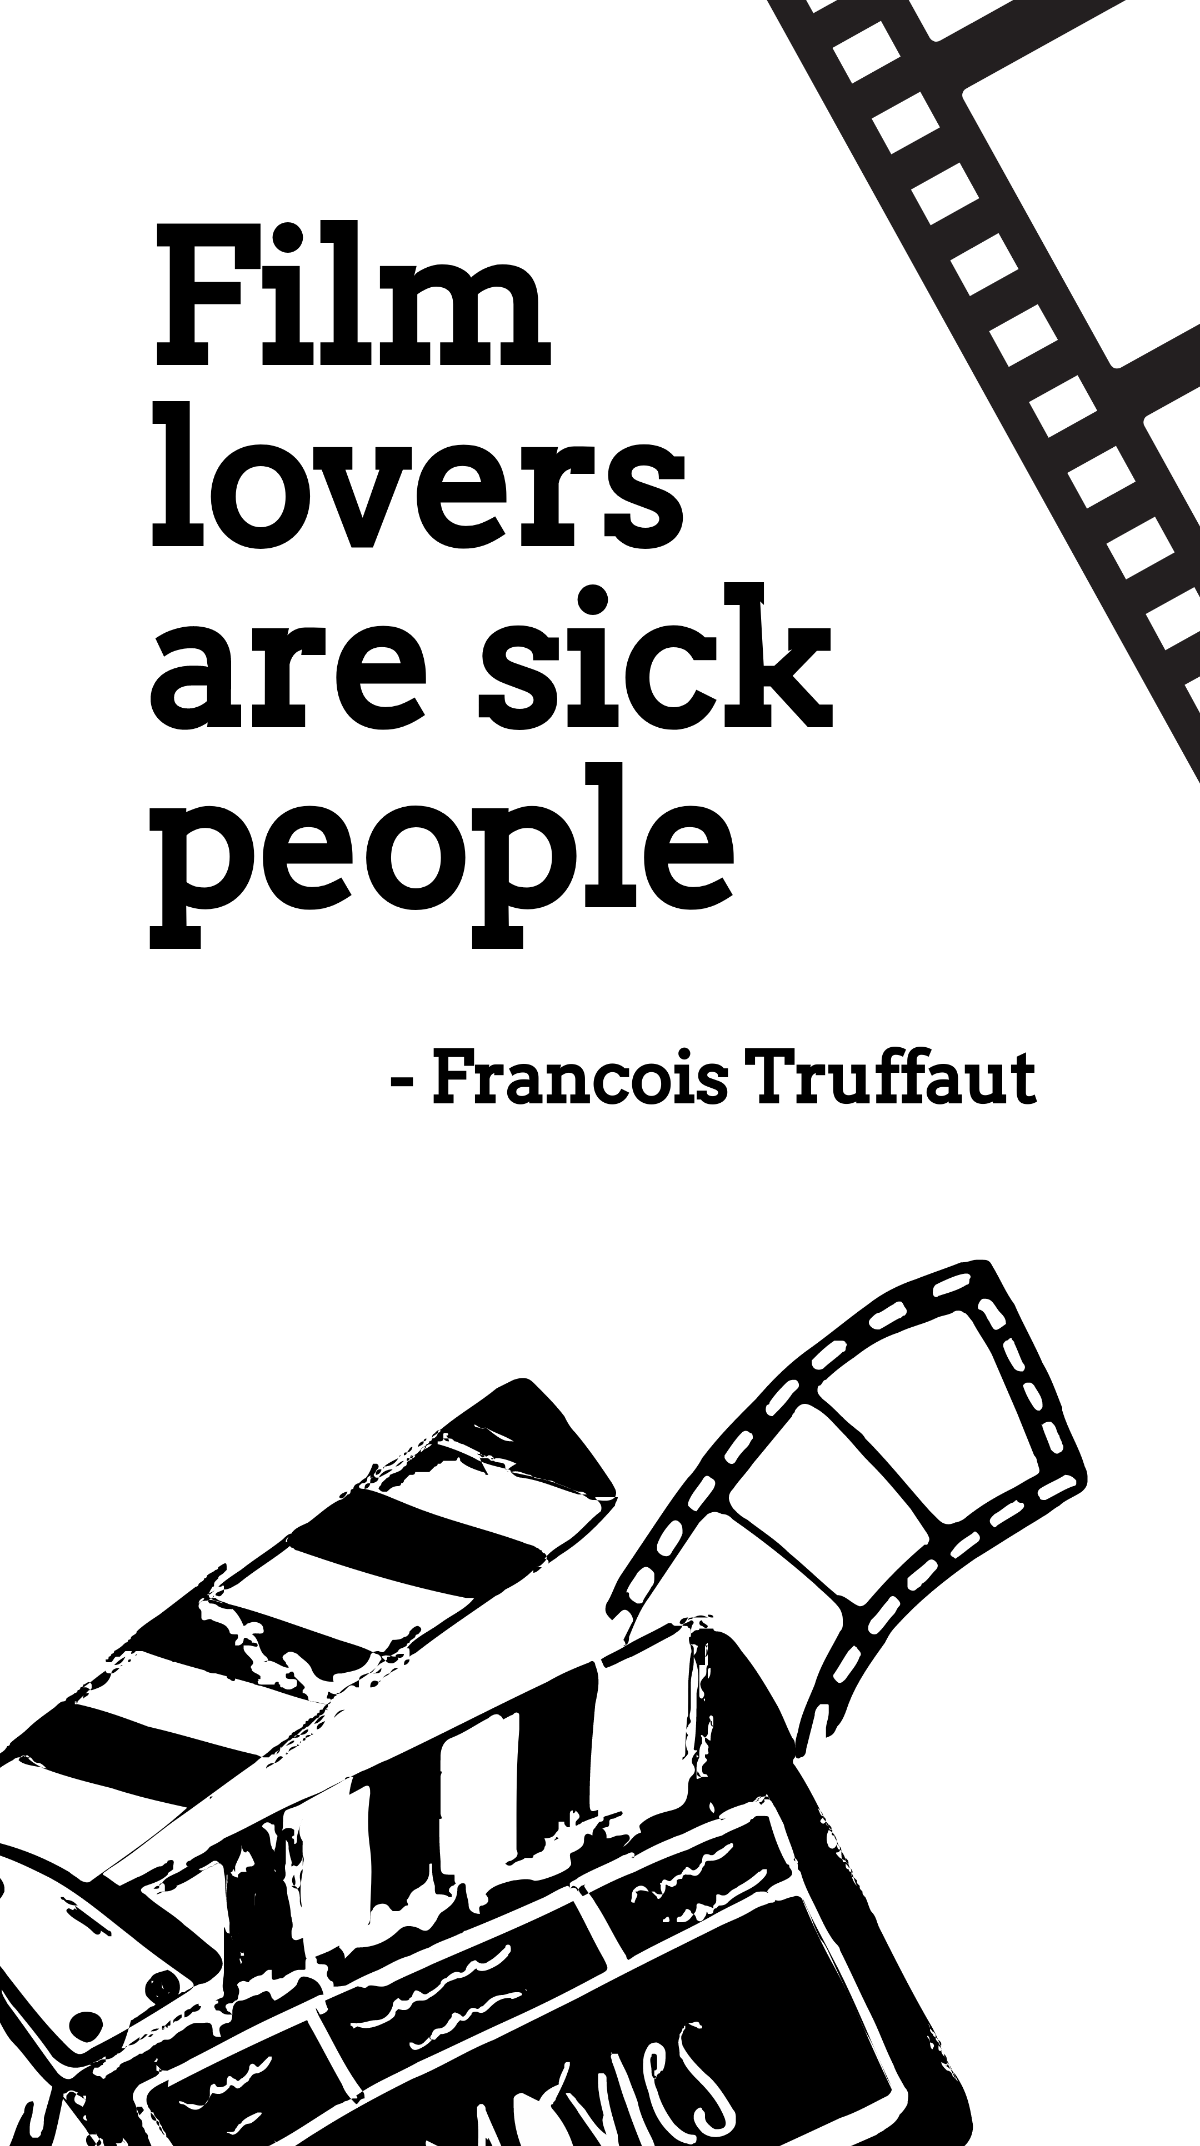 Francois Truffaut - Film lovers are sick people Template